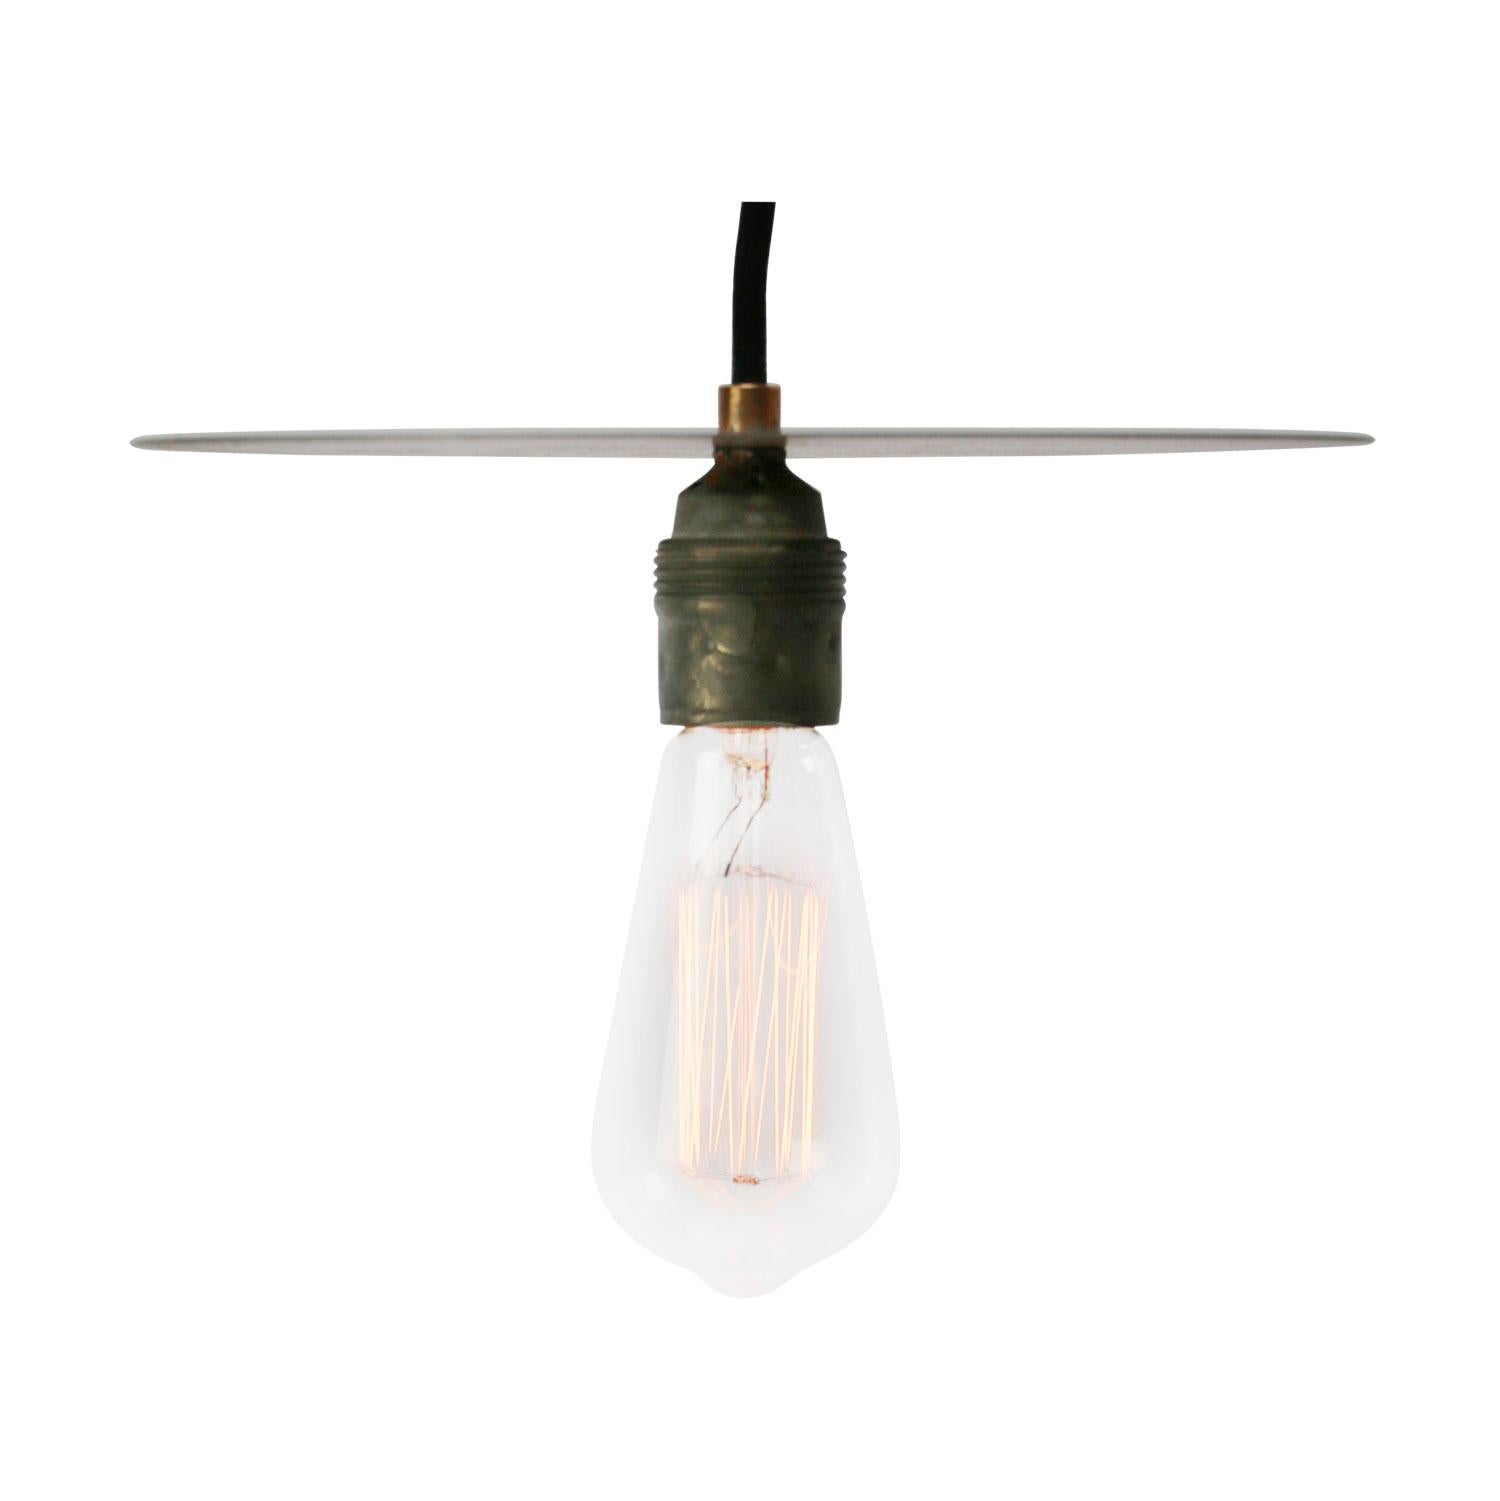 Metal pendant lights
Metal bulb holder with flat metal plate.
Size: 200 cm / 80